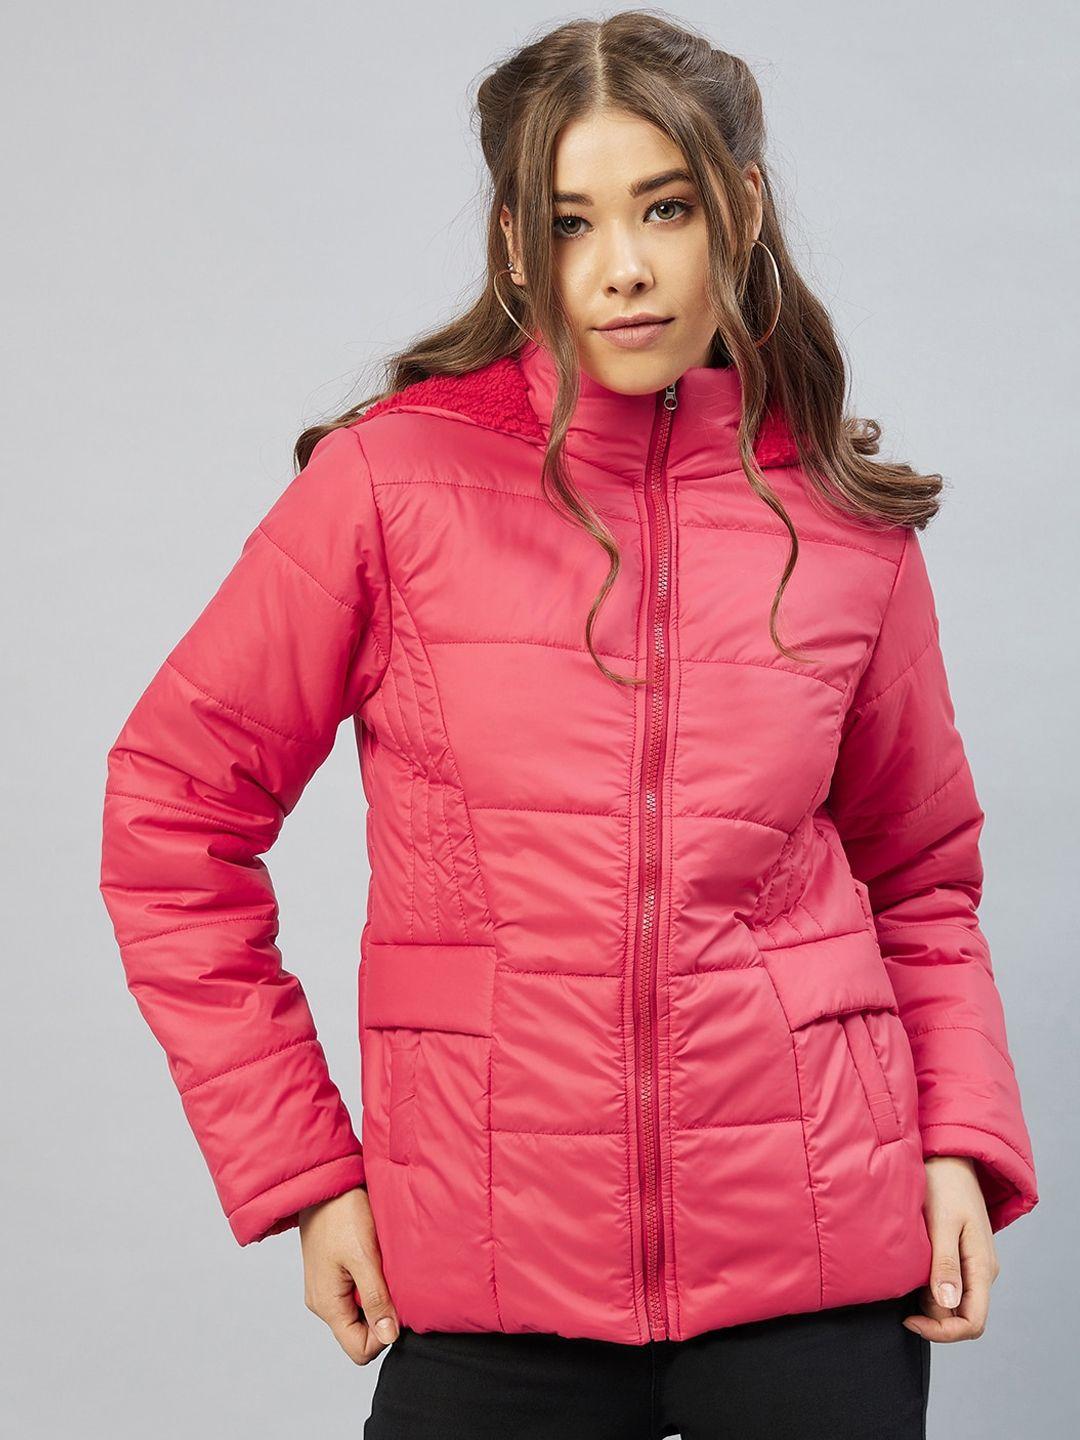 carlton-london-women-pink-lightweight-parka-jacket